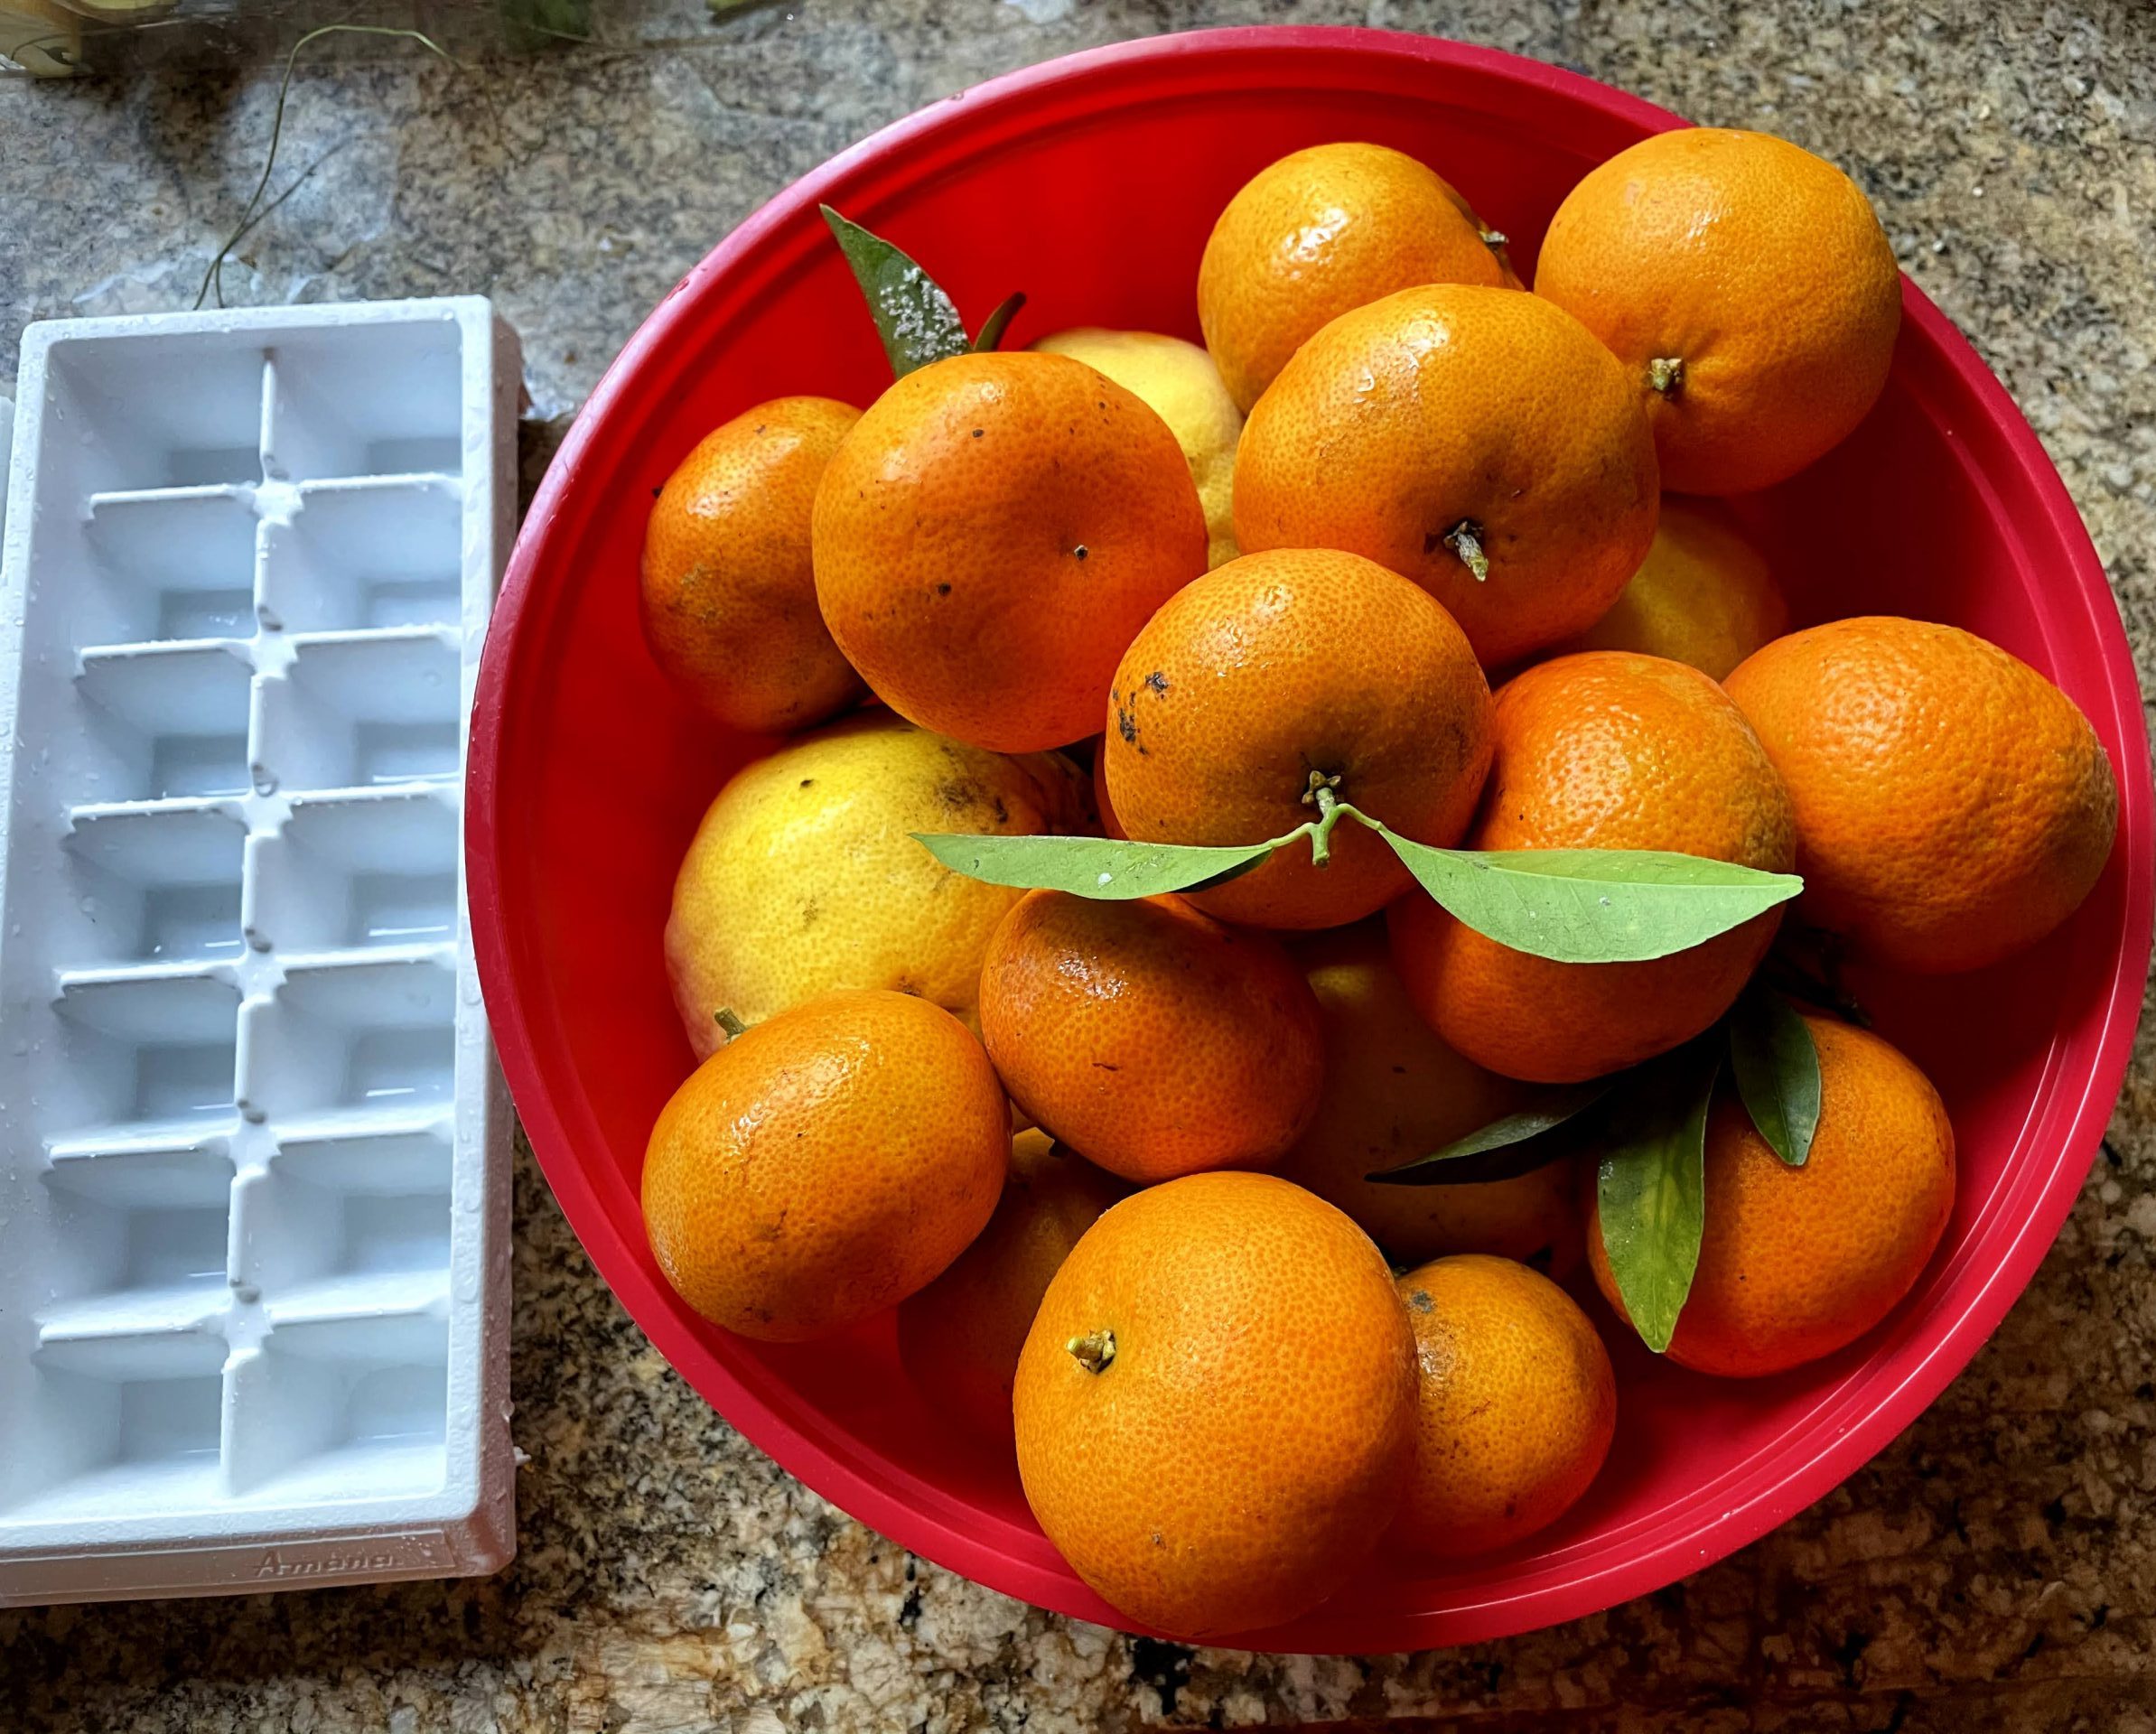 Citrus fruits for juicing